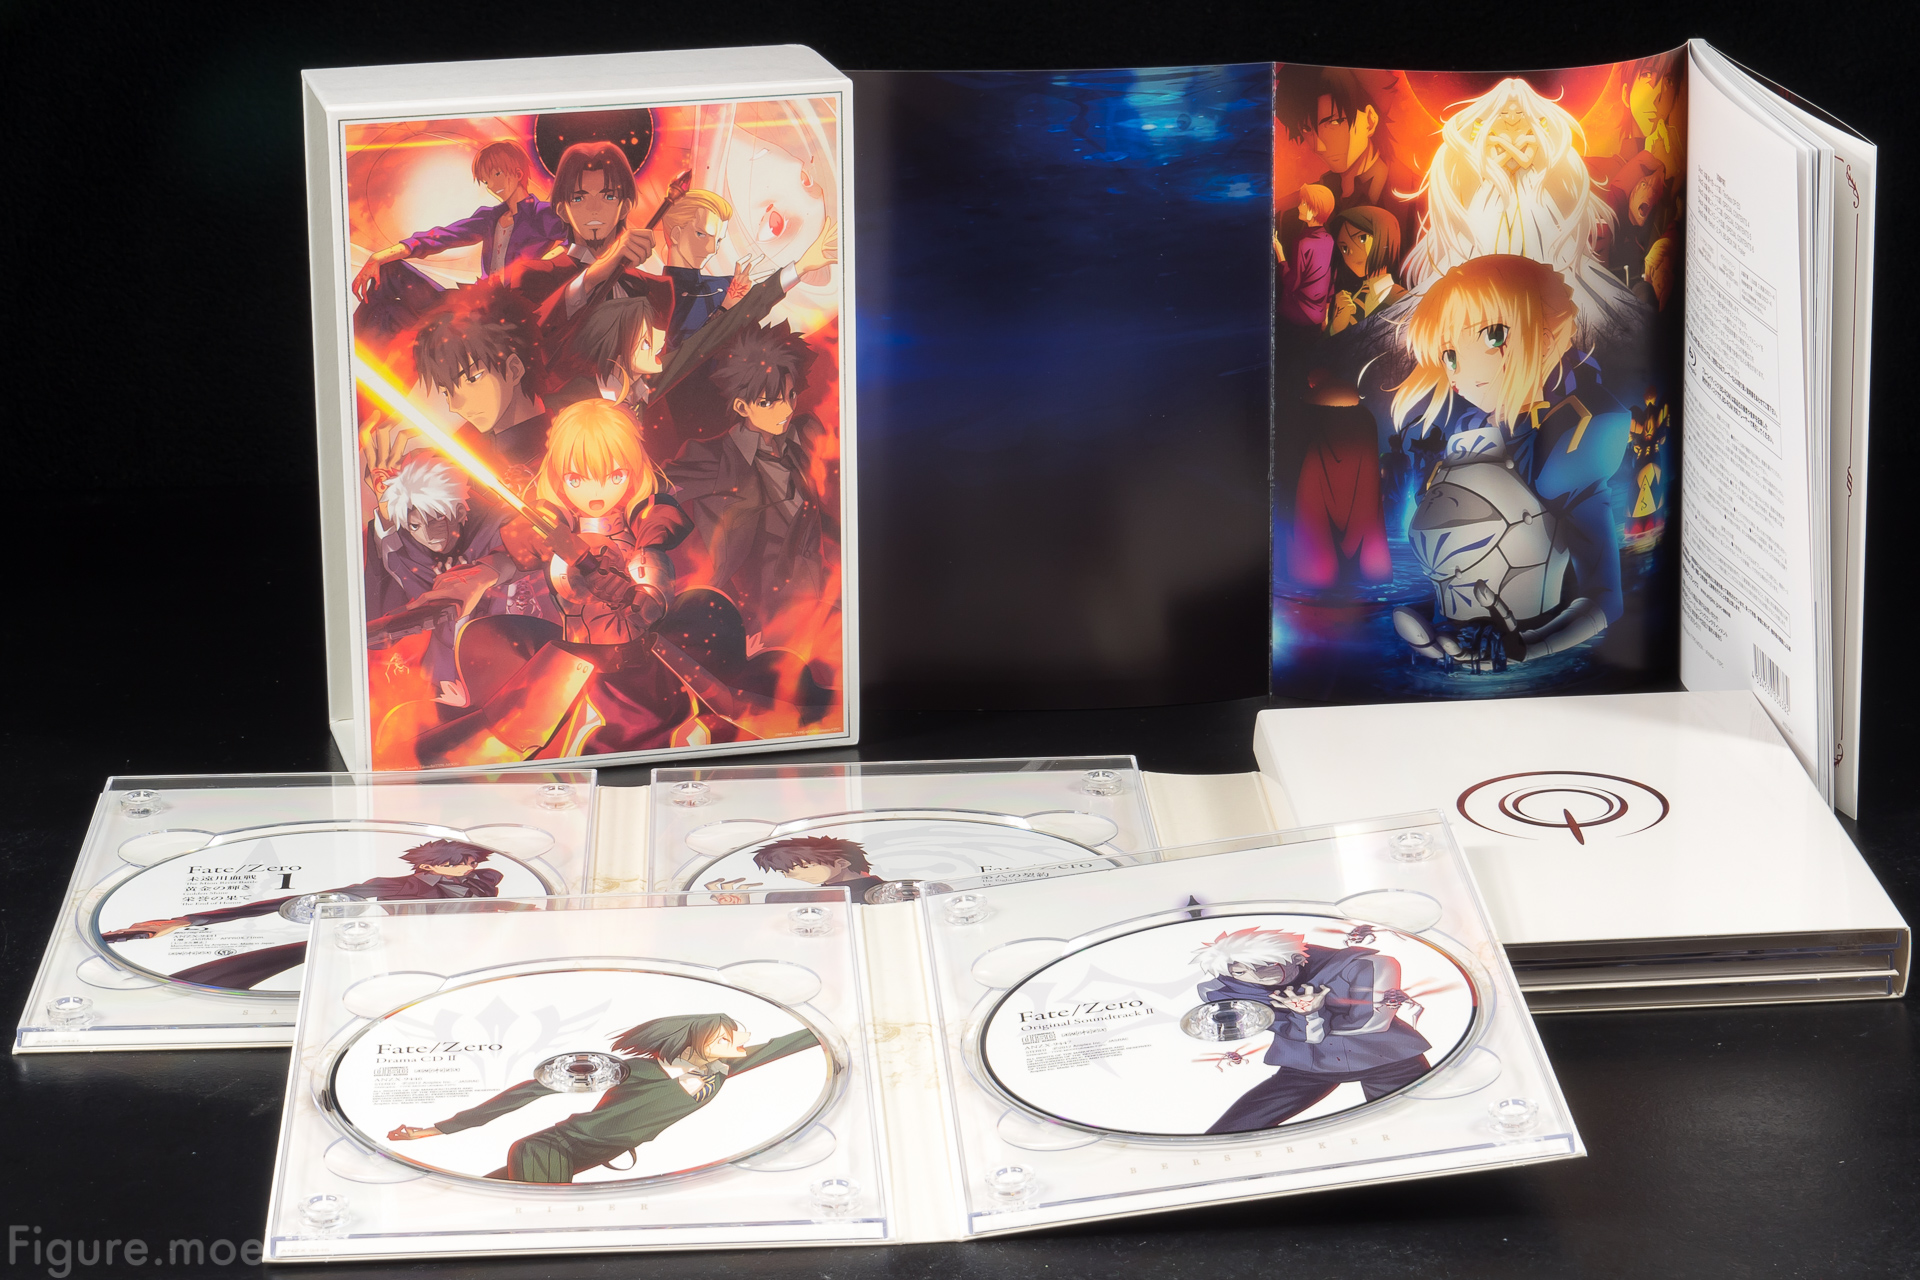 Fate Stay Night UBW S2 + Zero S2 Blu-ray Boxes – Figure.moe